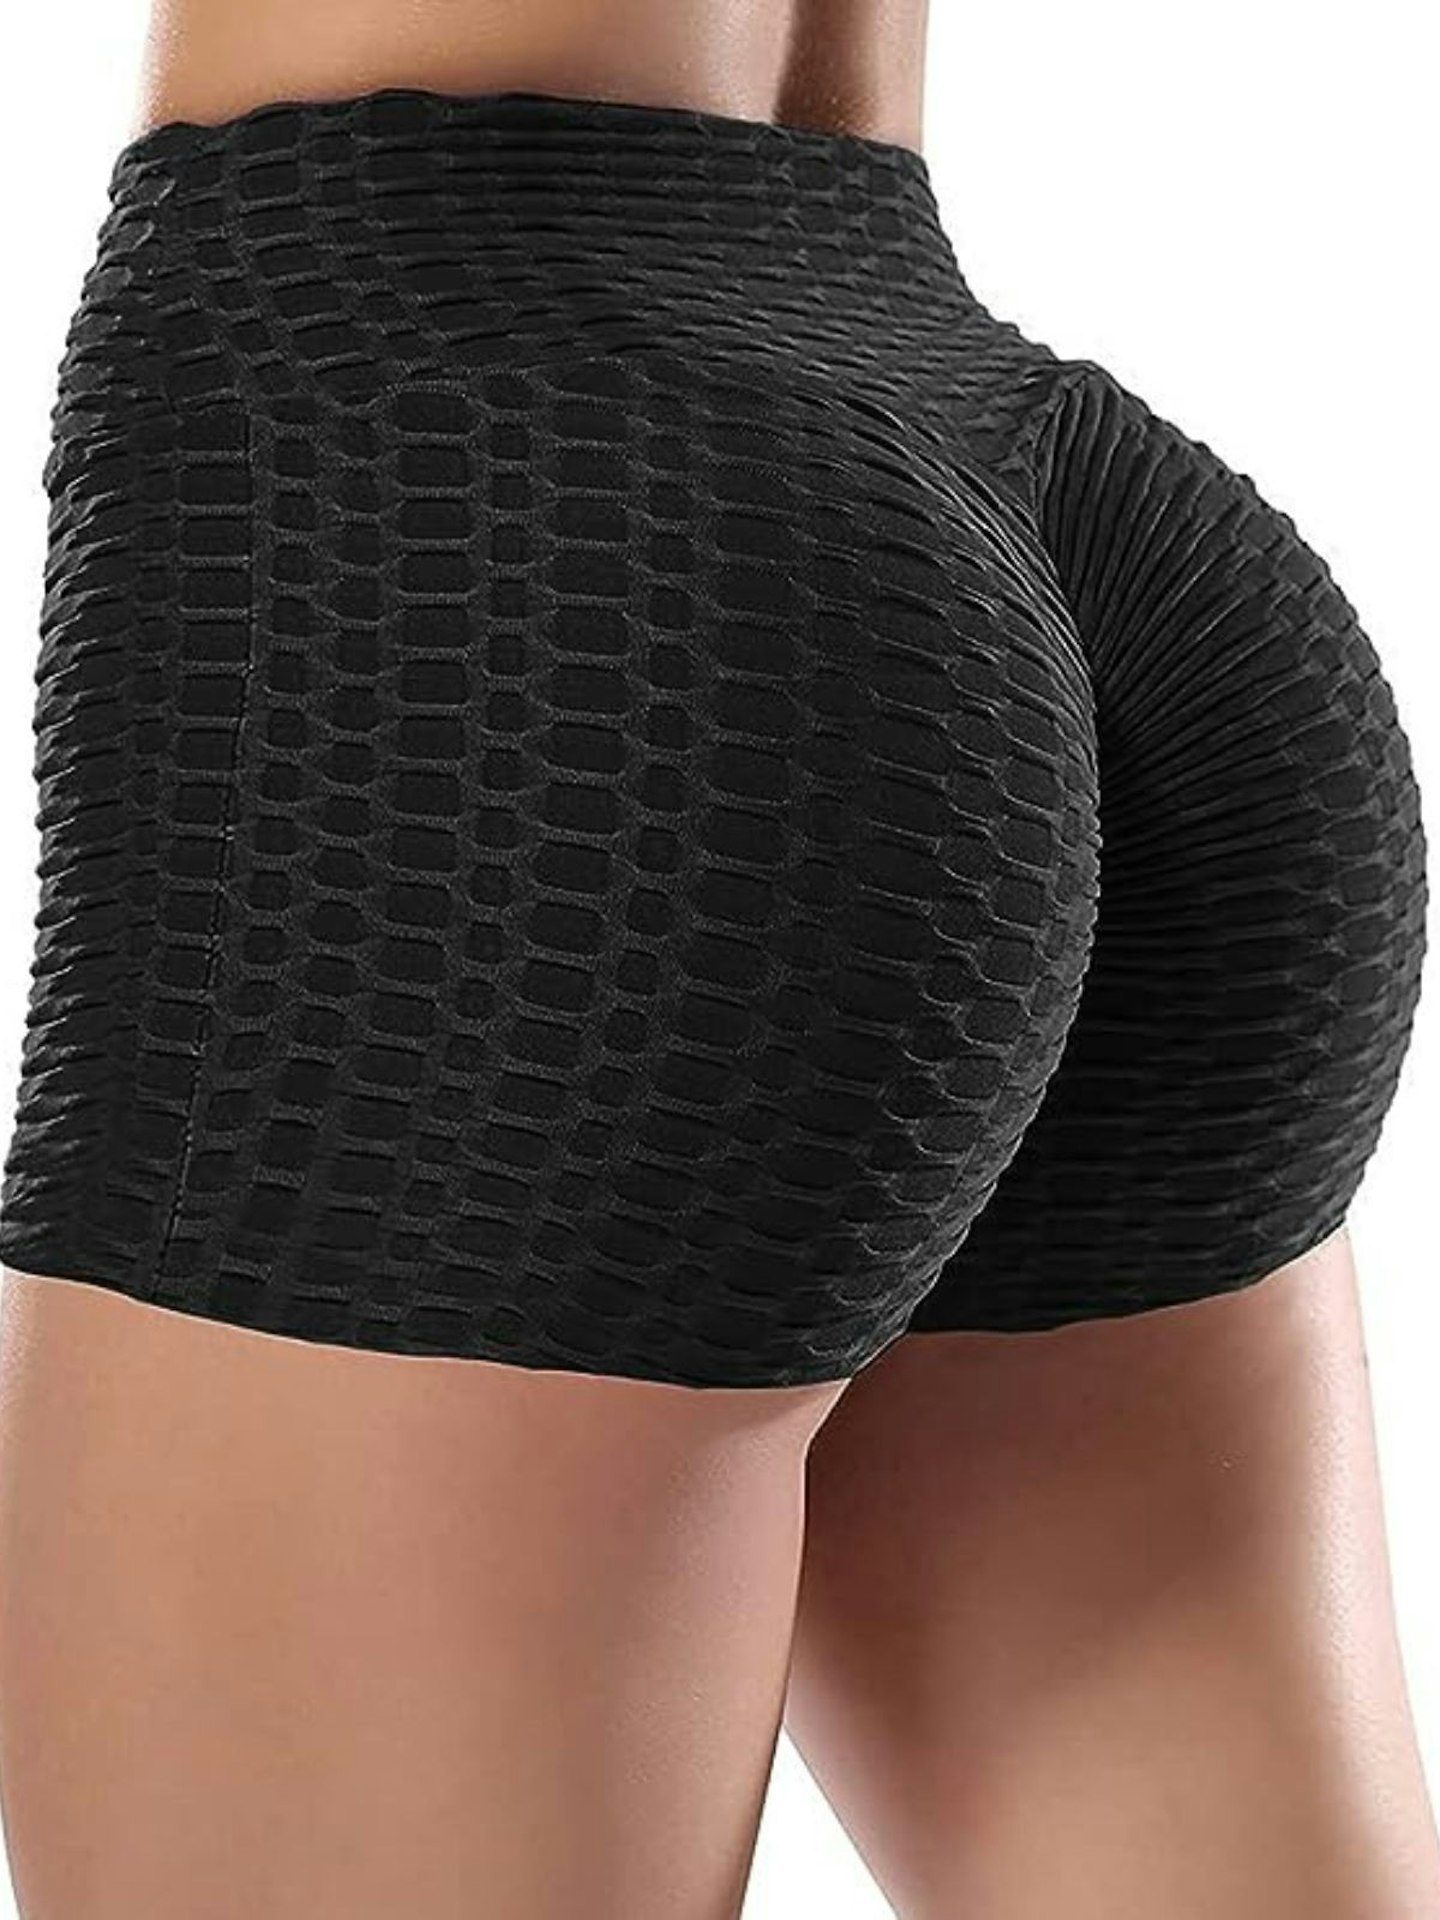 STARBUILD Honeycomb Scrunch Butt Gym Shorts